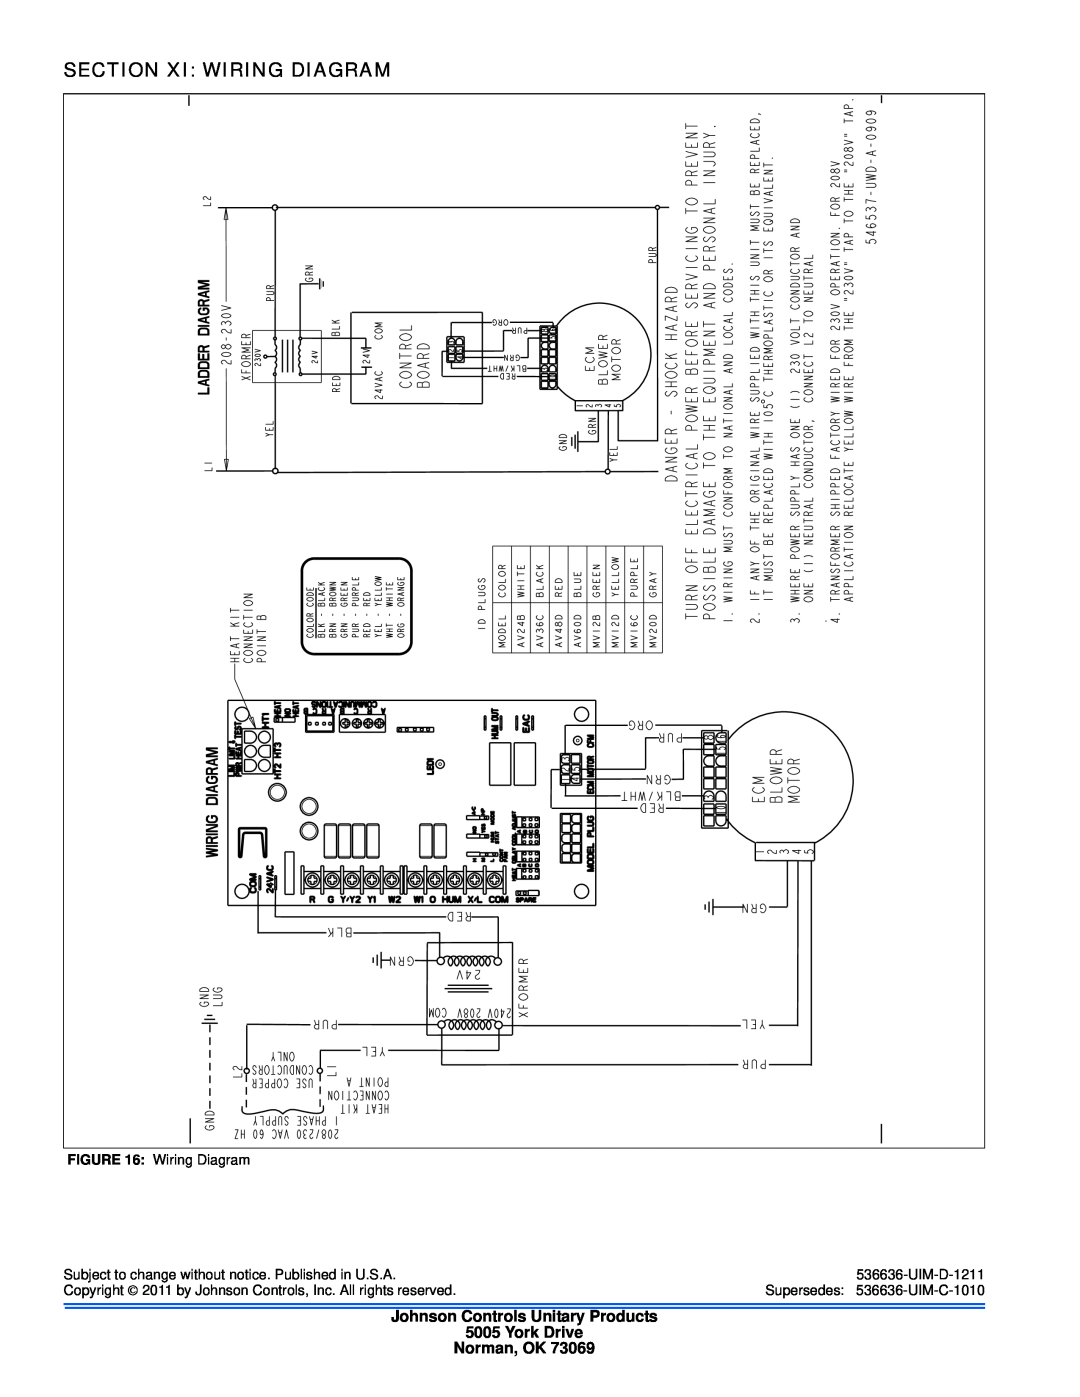 Johnson Controls AV*(C) Series Section Xi Wiring Diagram, Johnson Controls Unitary Products 5005 York Drive, Norman, OK 